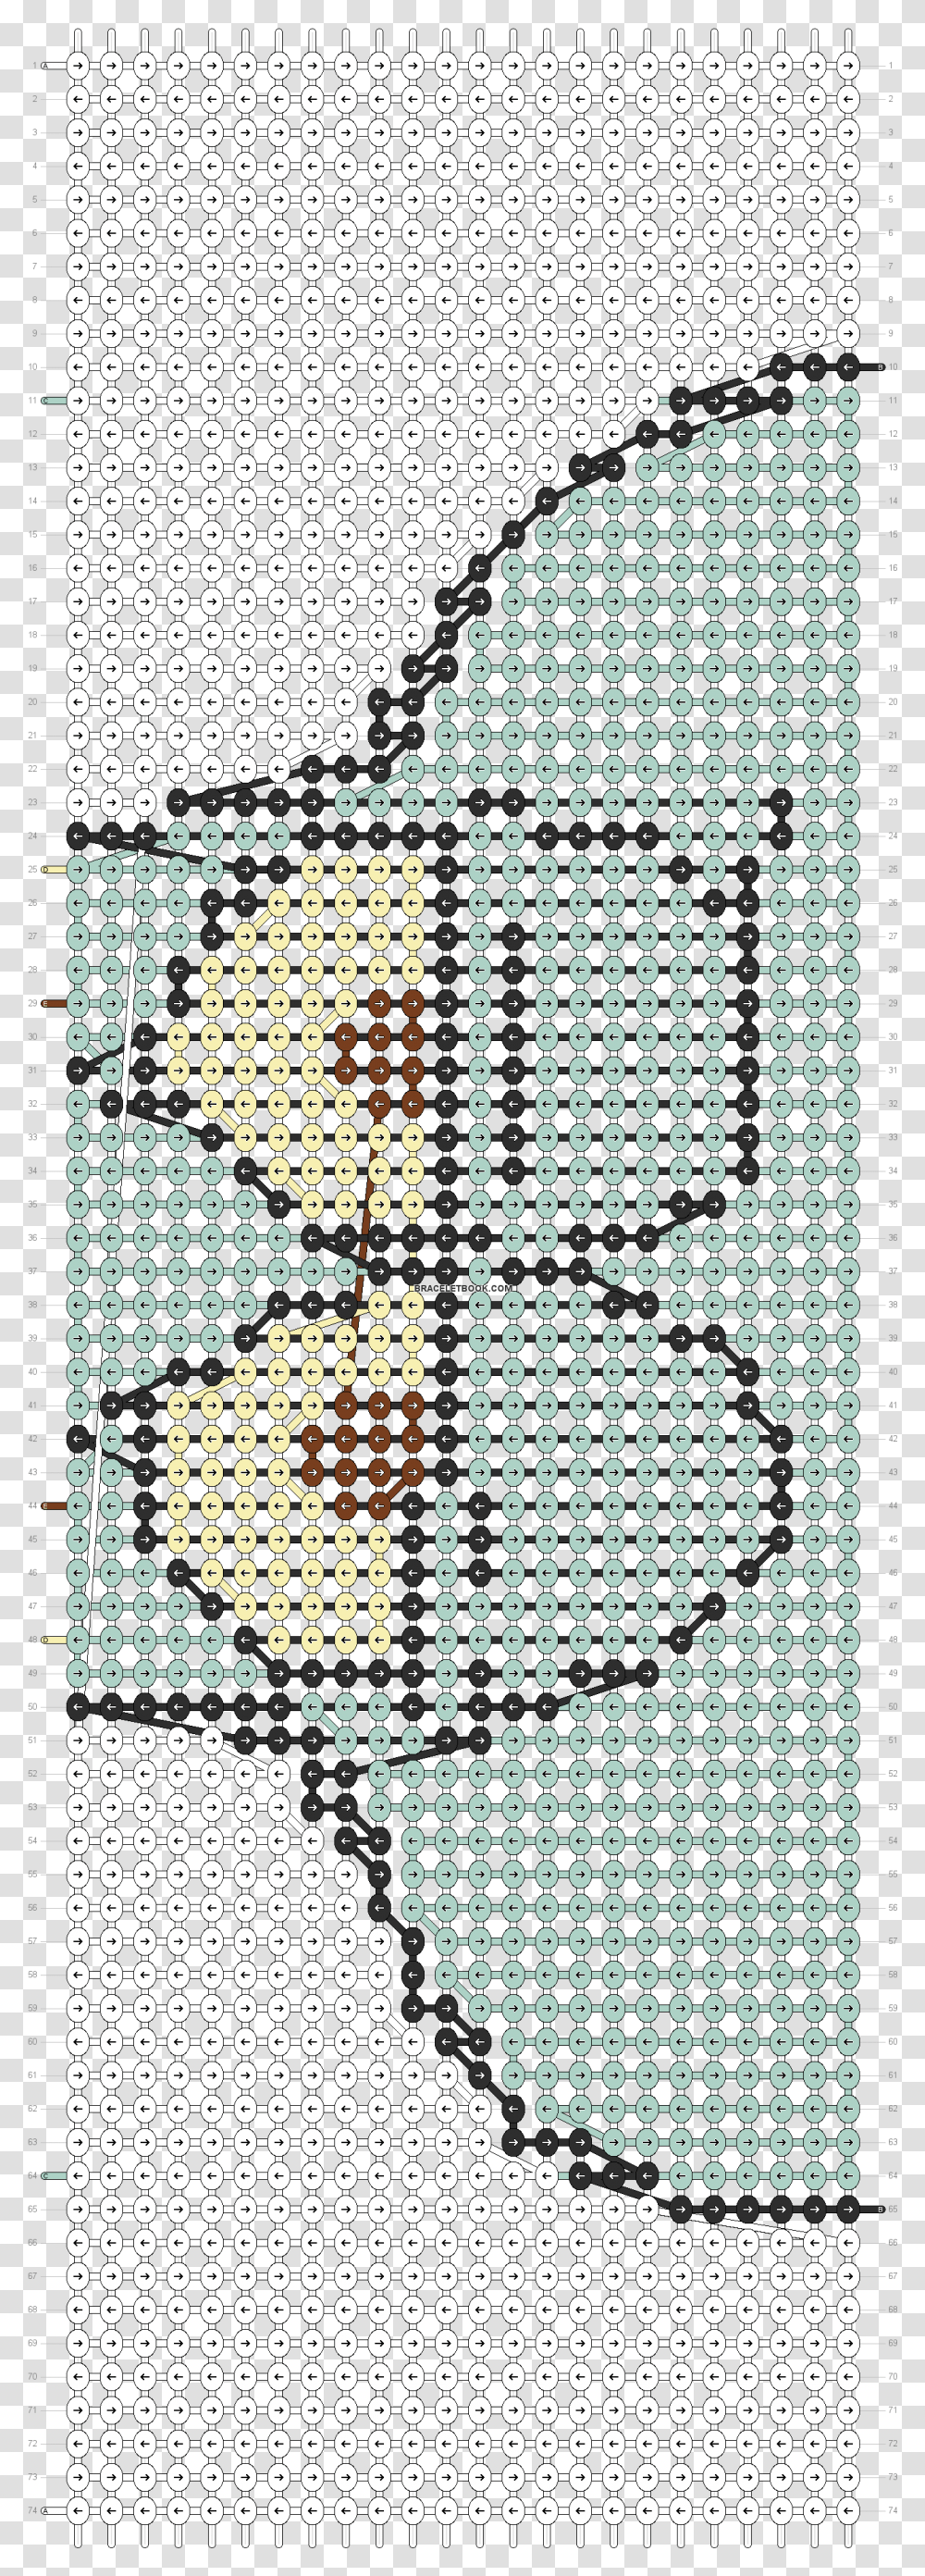 Alpha Pattern Squidward Friendship Bracelet Patterns, Light, Grille, Sweets Transparent Png